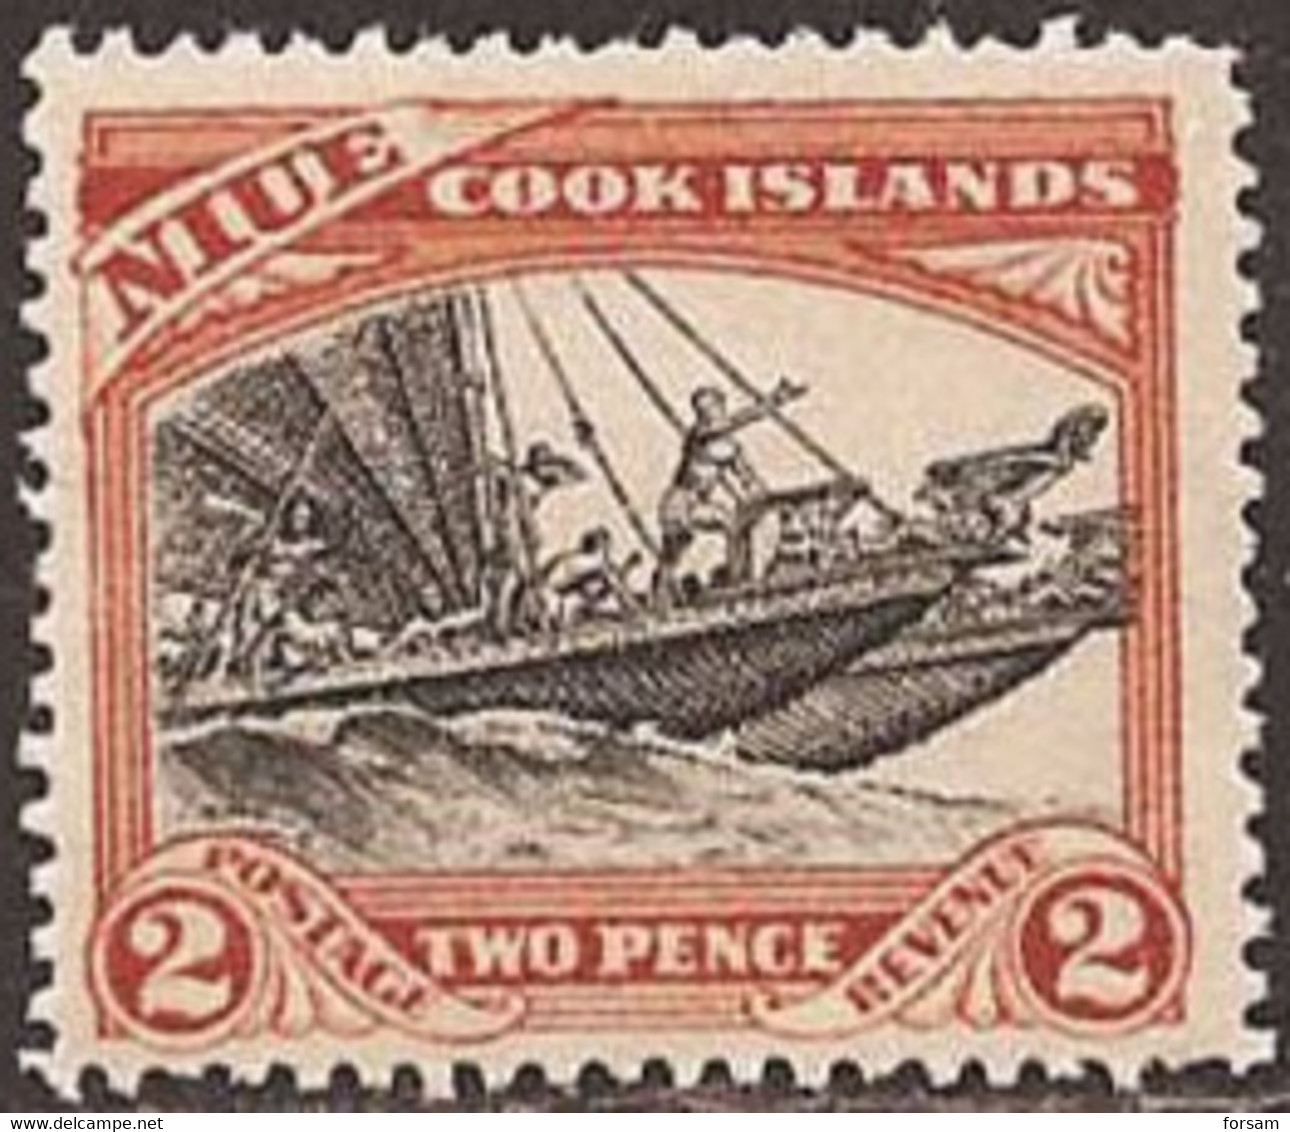 NIUE..1932..Michel # 40...MLH. - Niue